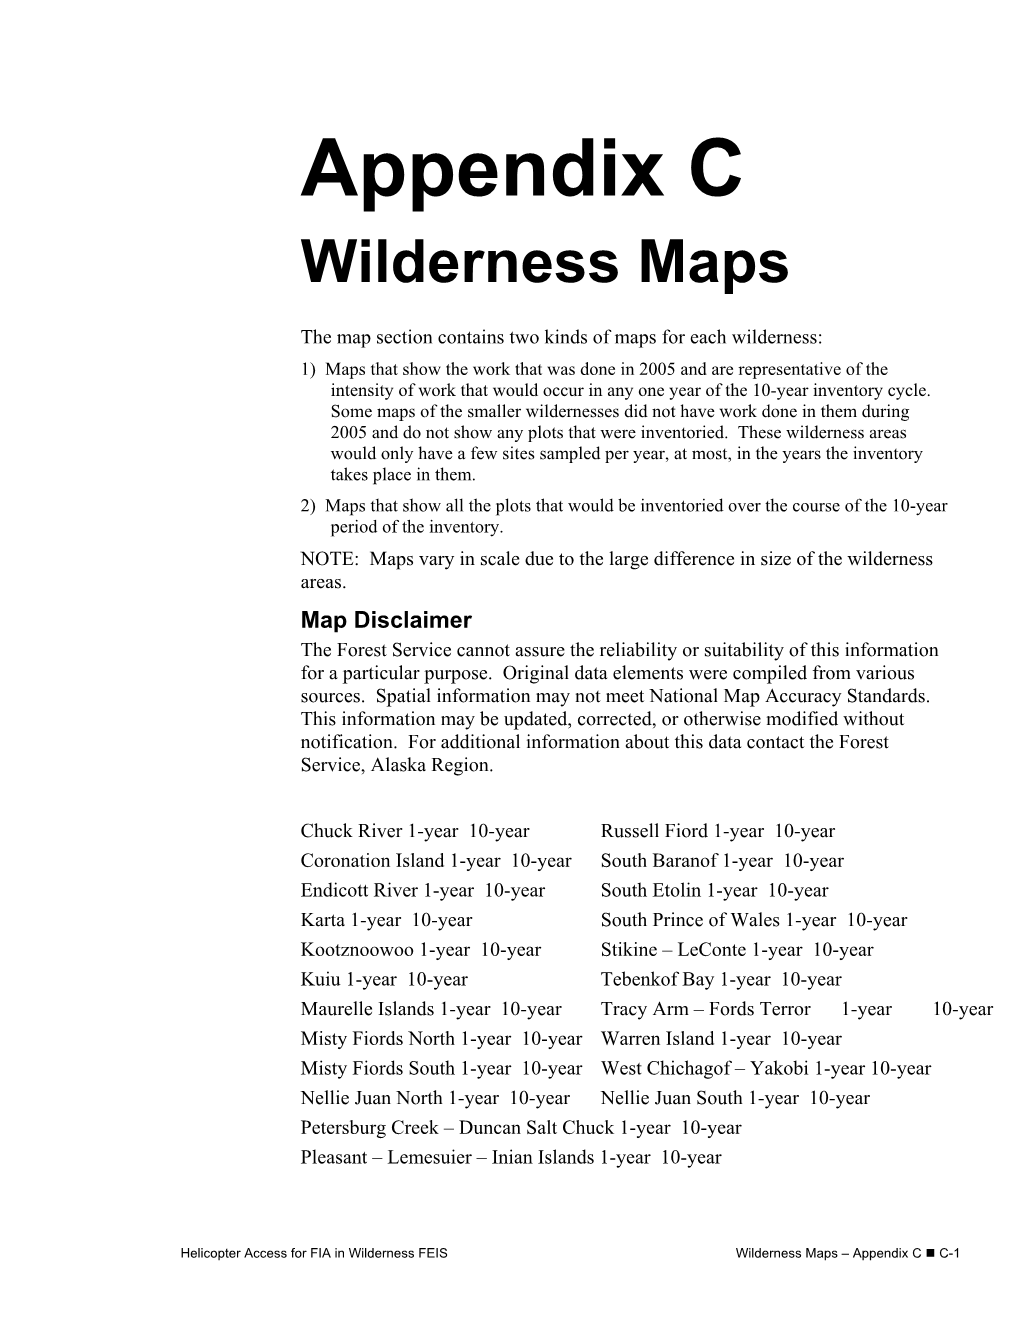 Appendix C Wilderness Maps